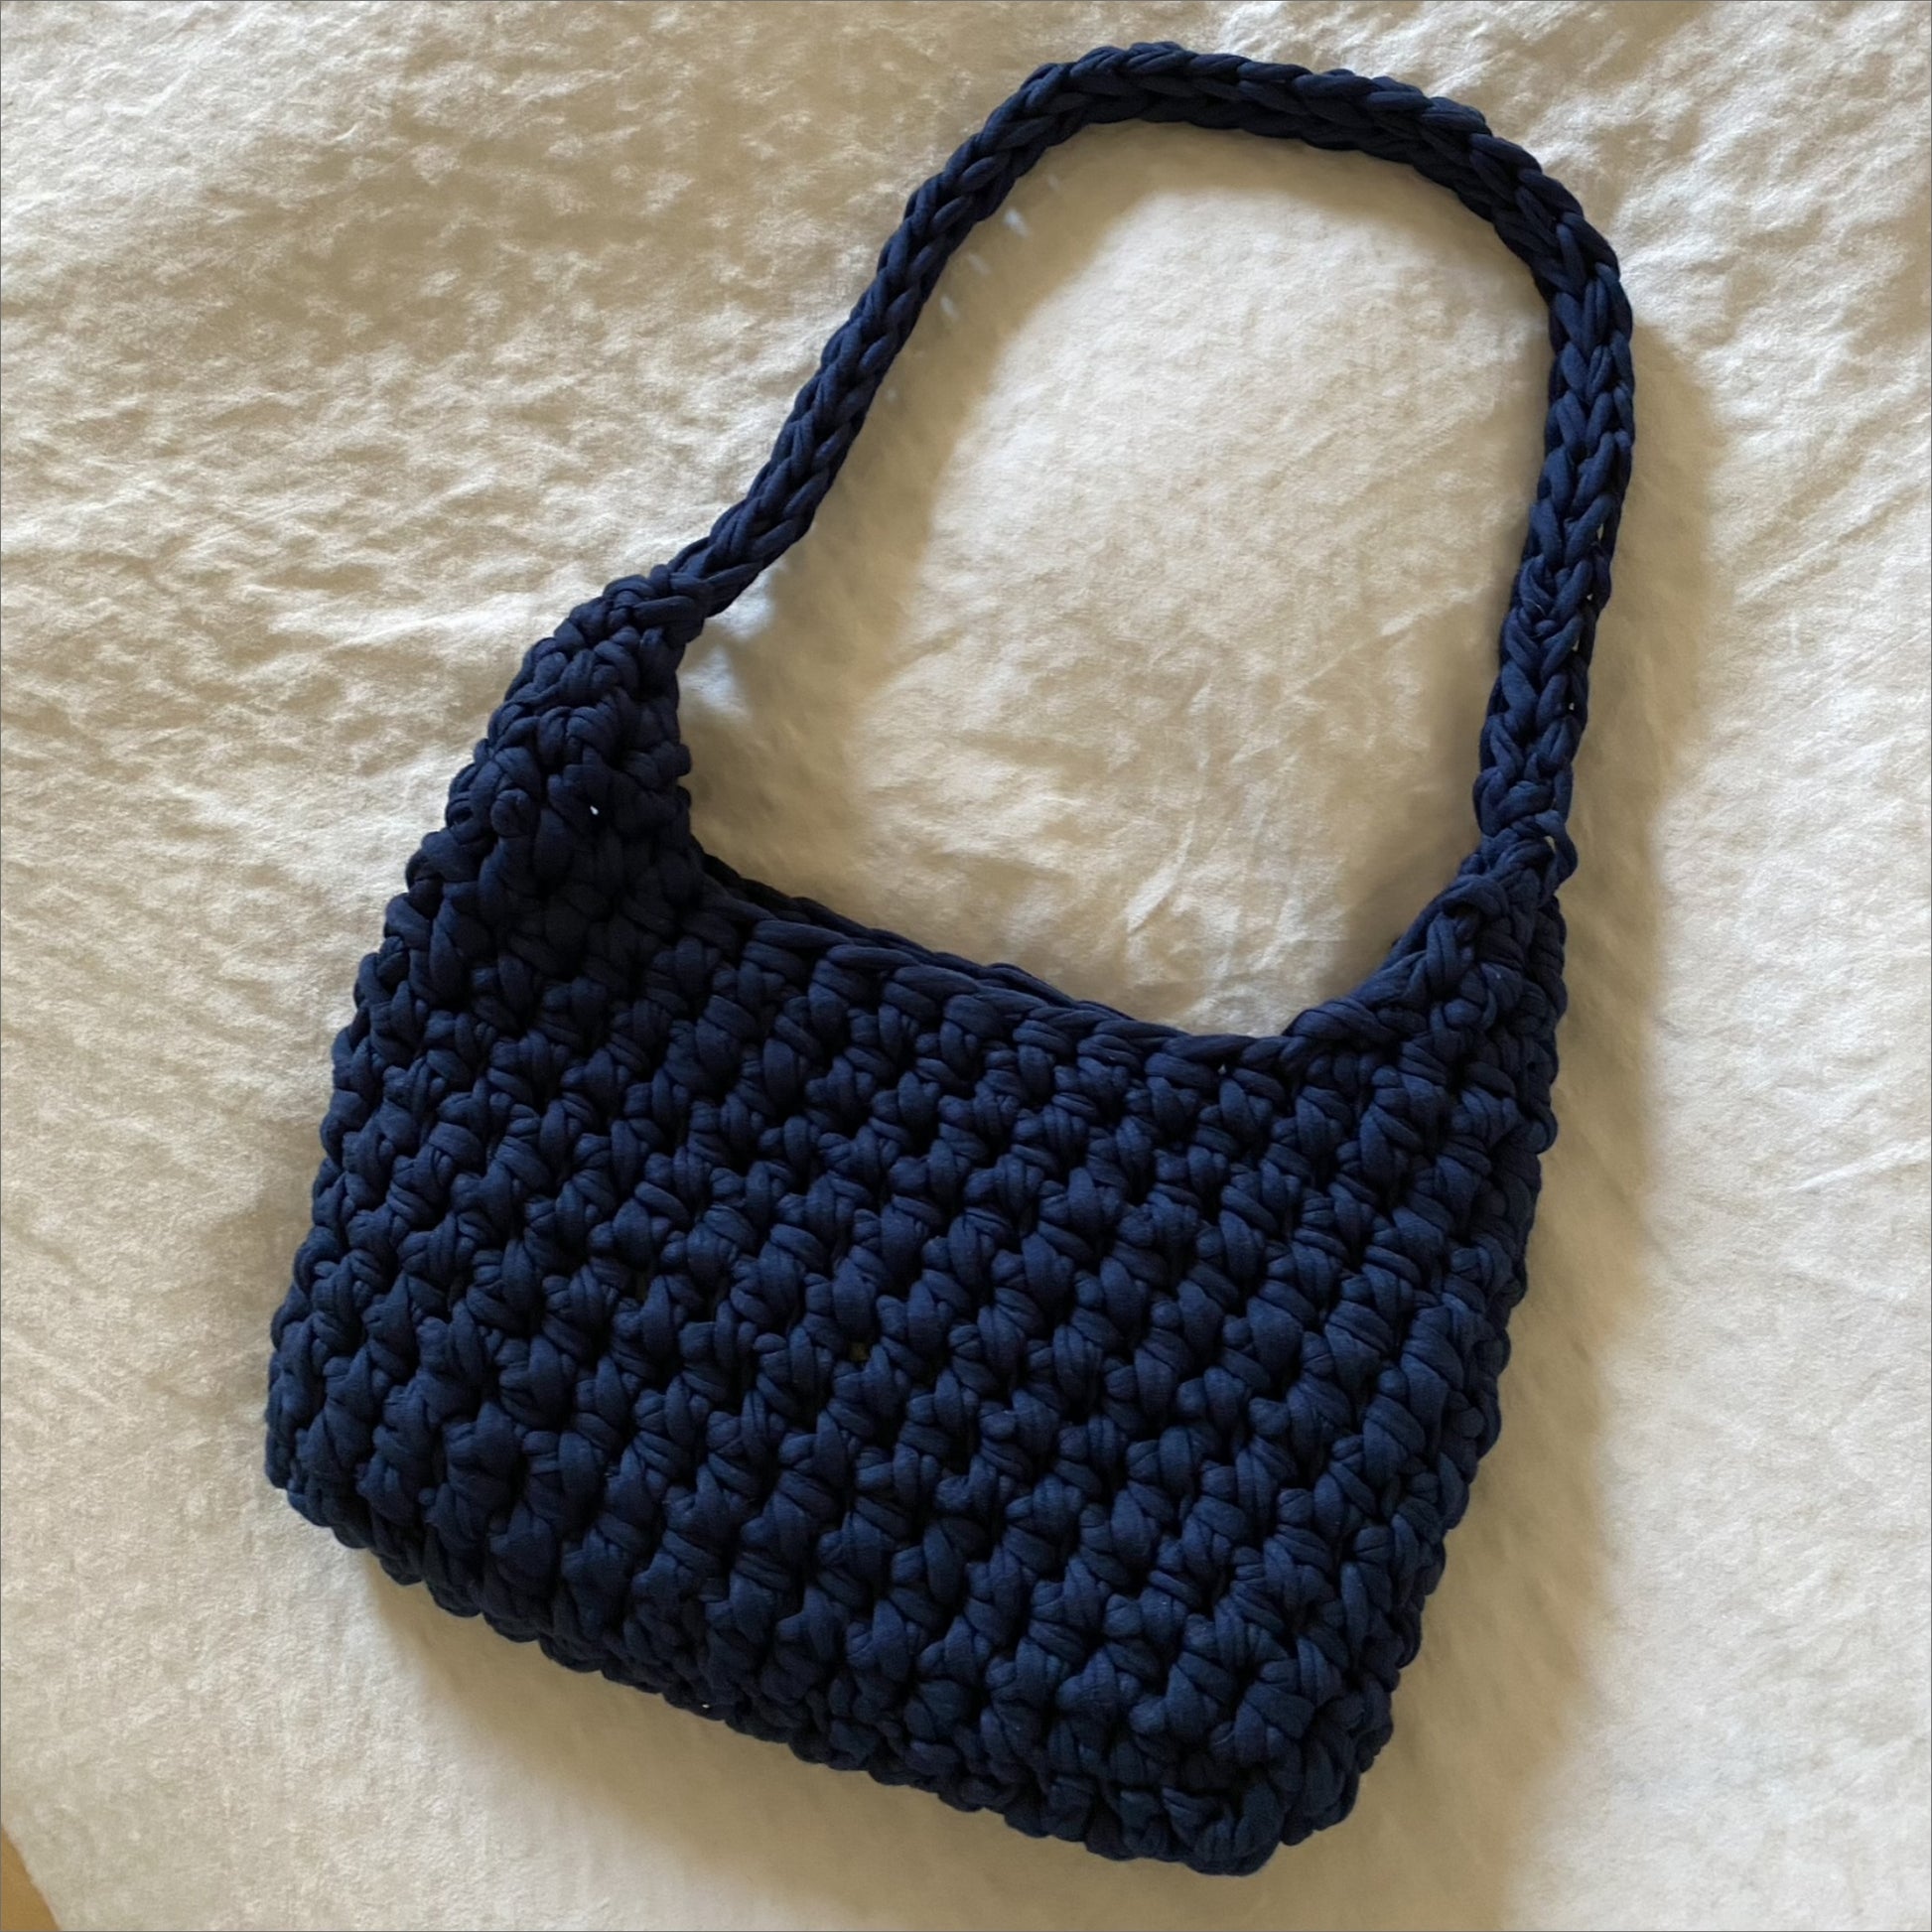 T-Shirt Yarn Crochet Bag (Free Pattern)